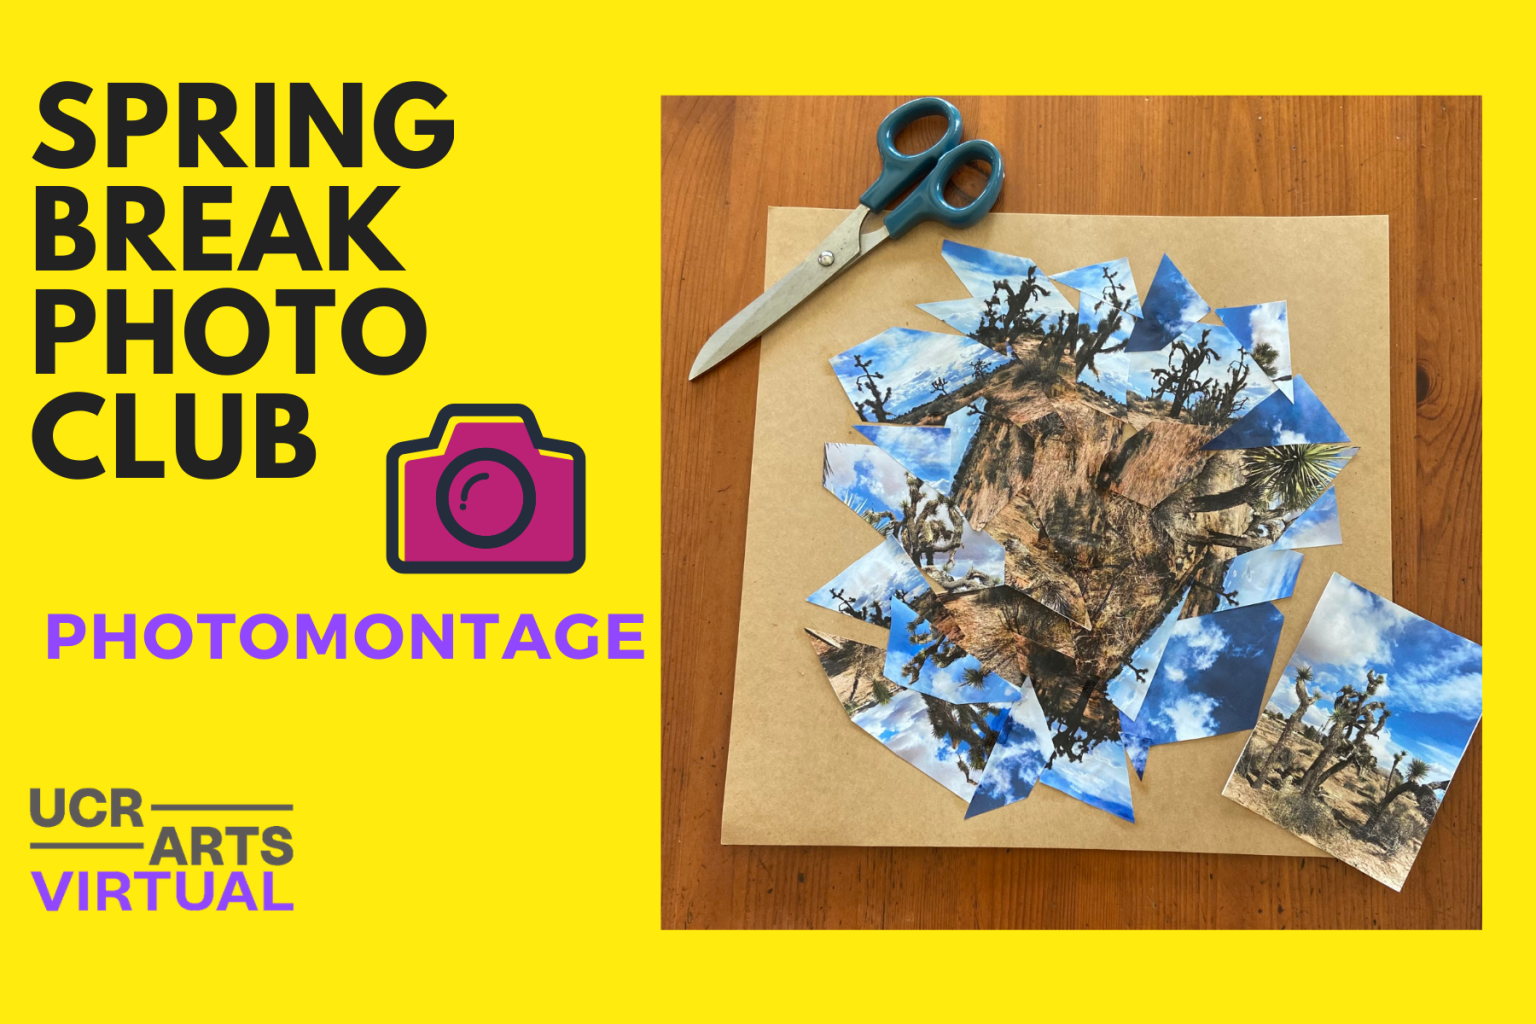 Spring Break Photo Club Photomontage Virtual UCR ARTS